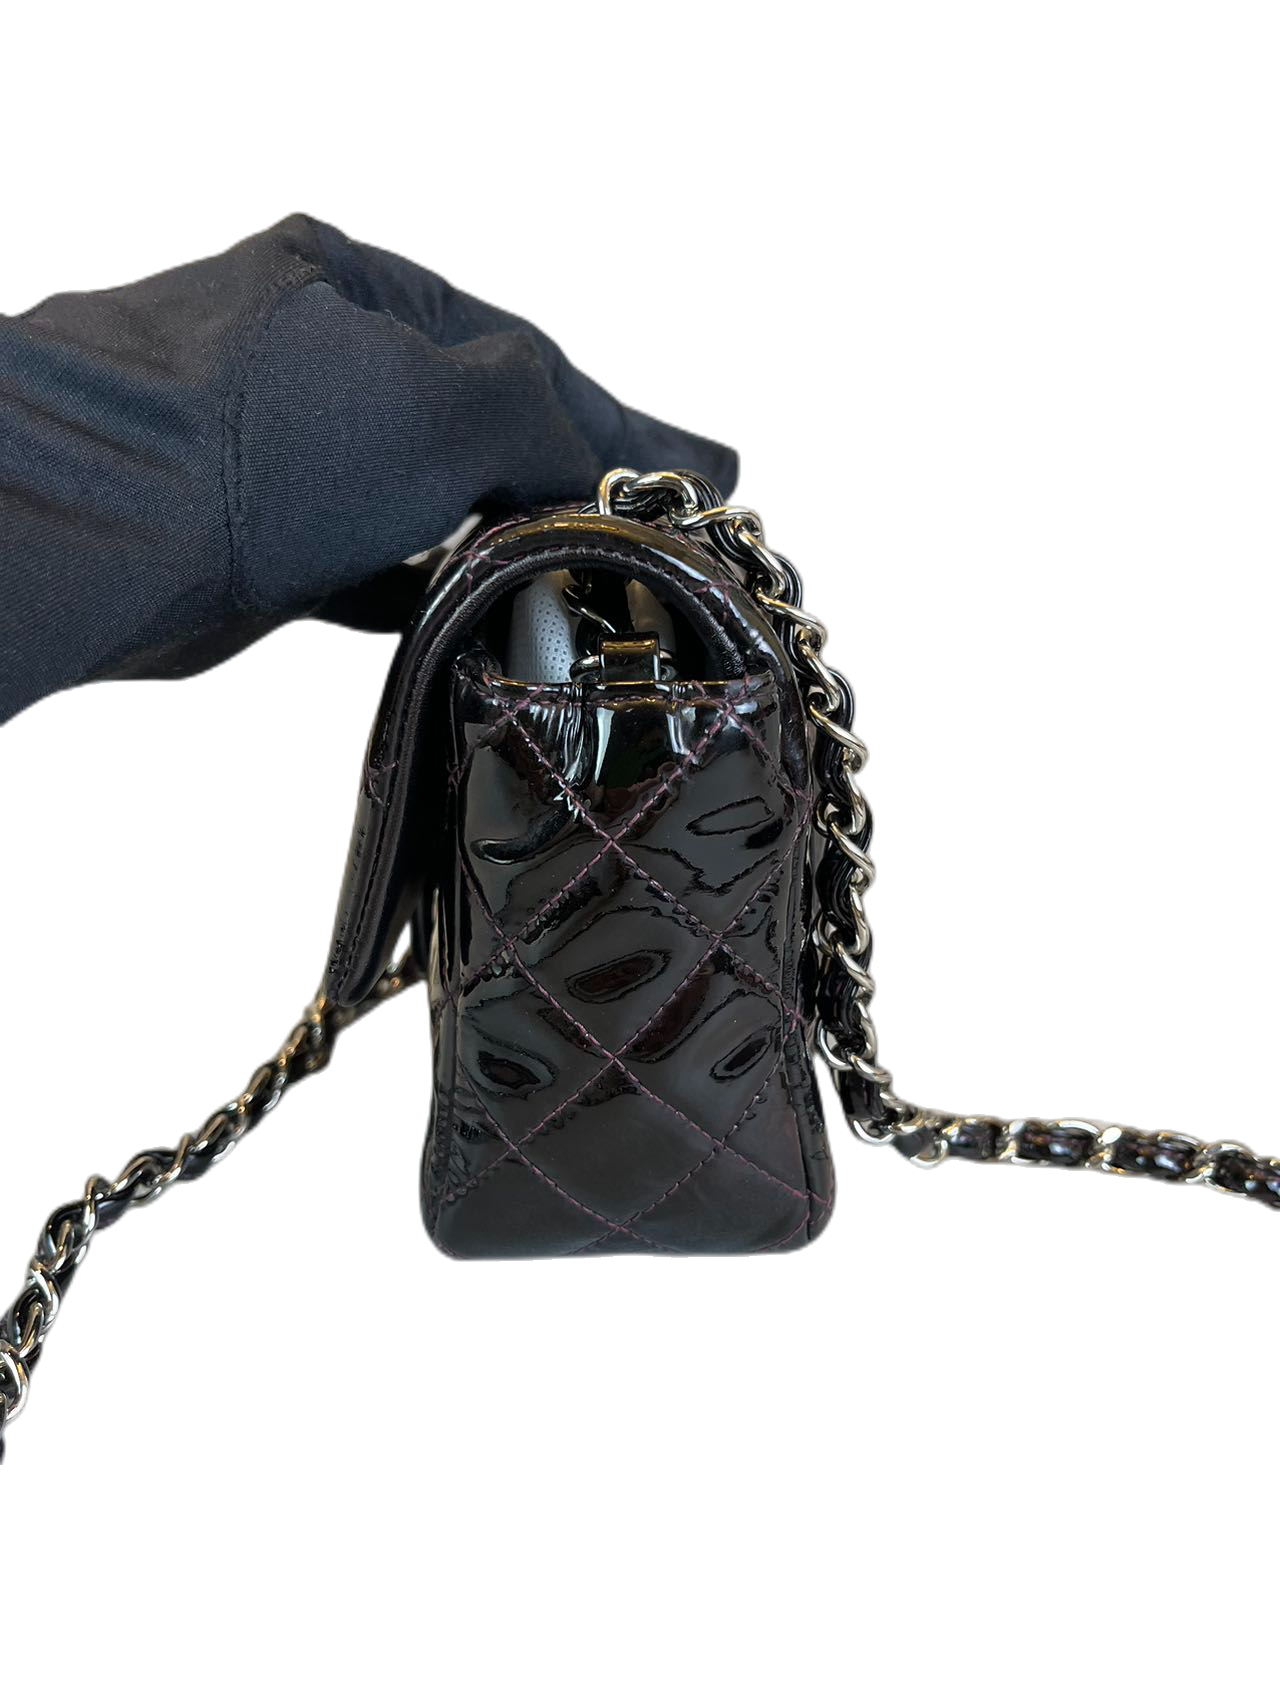 Preloved Chanel Black Patent Leather Mini Classic Flap Shoulder Bag